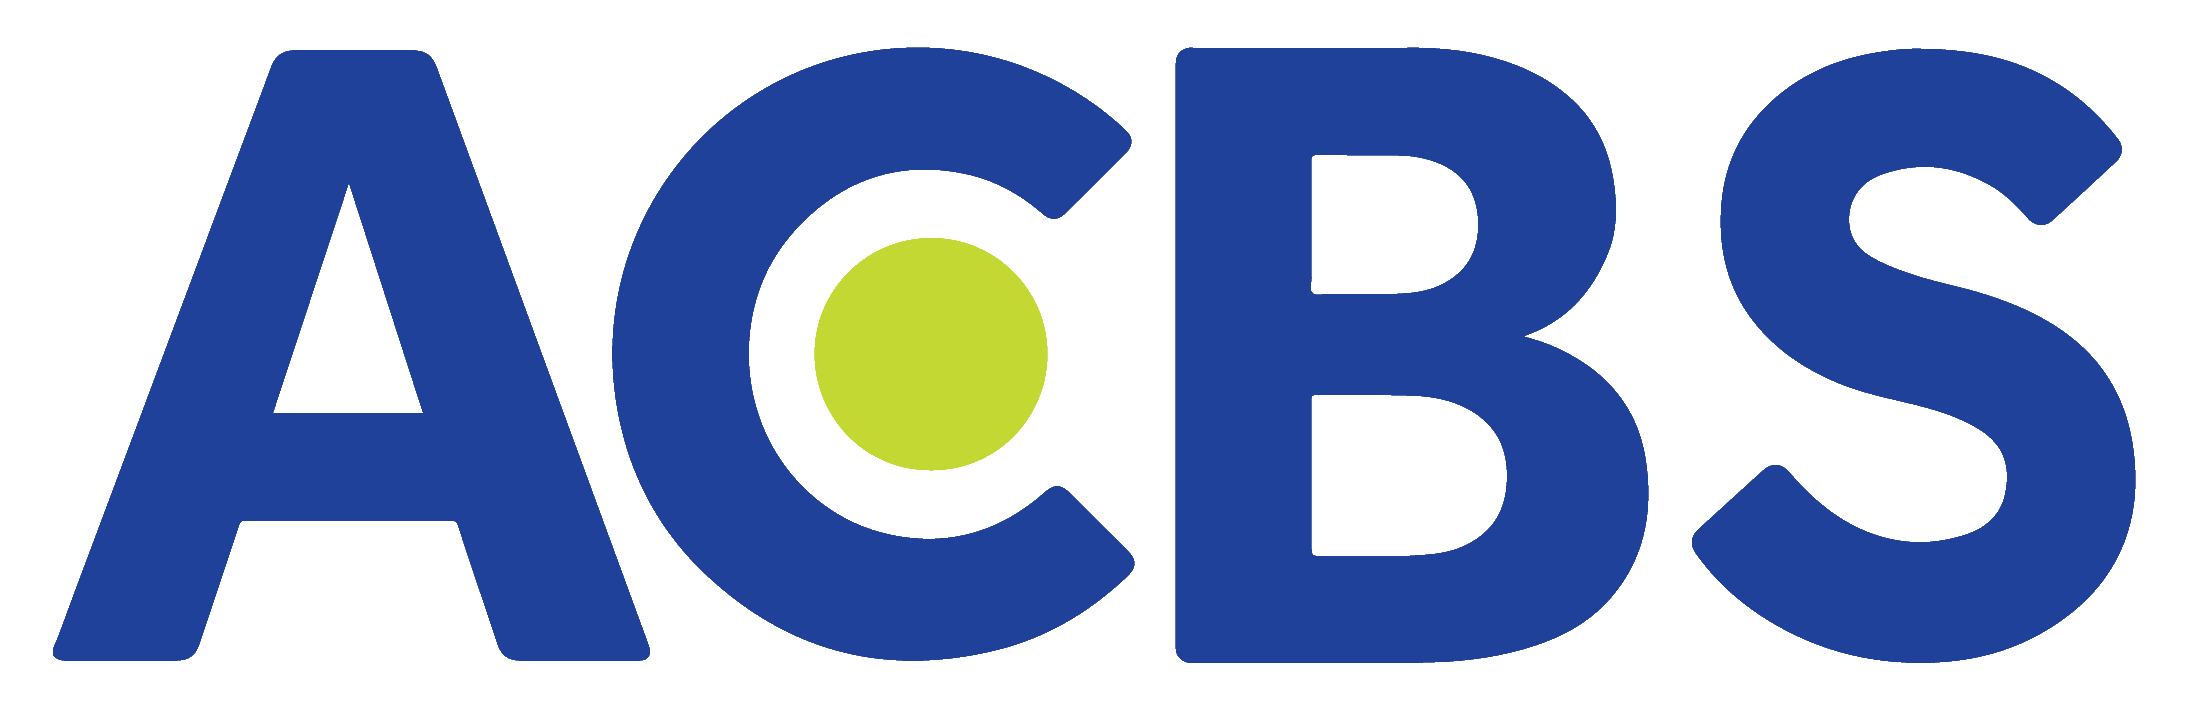 ACB Securities Ltd., Co